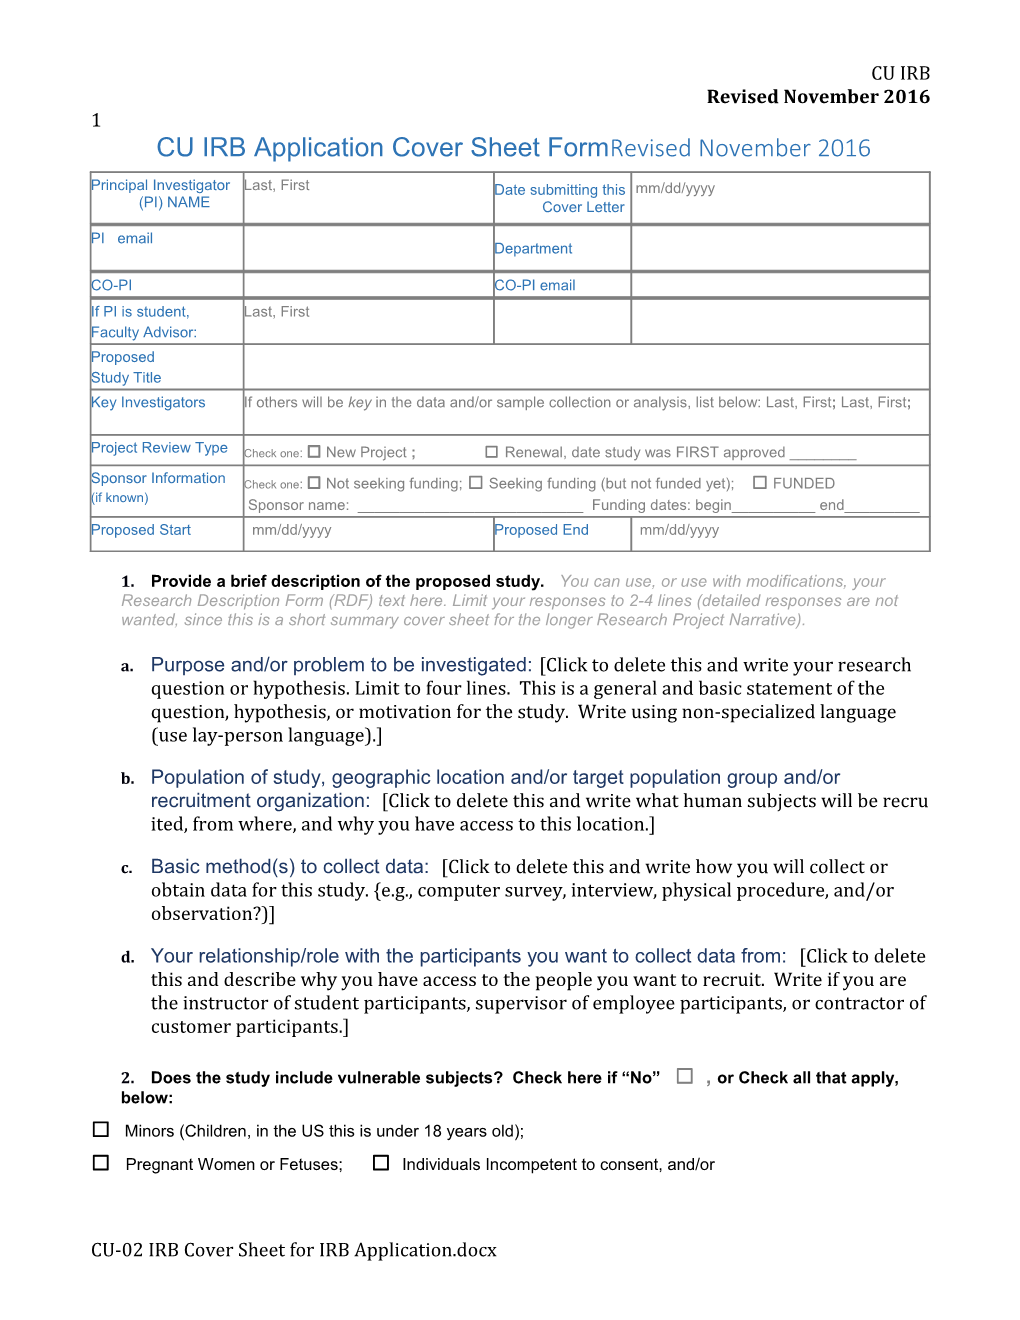 CU IRB Application Cover Sheet Form